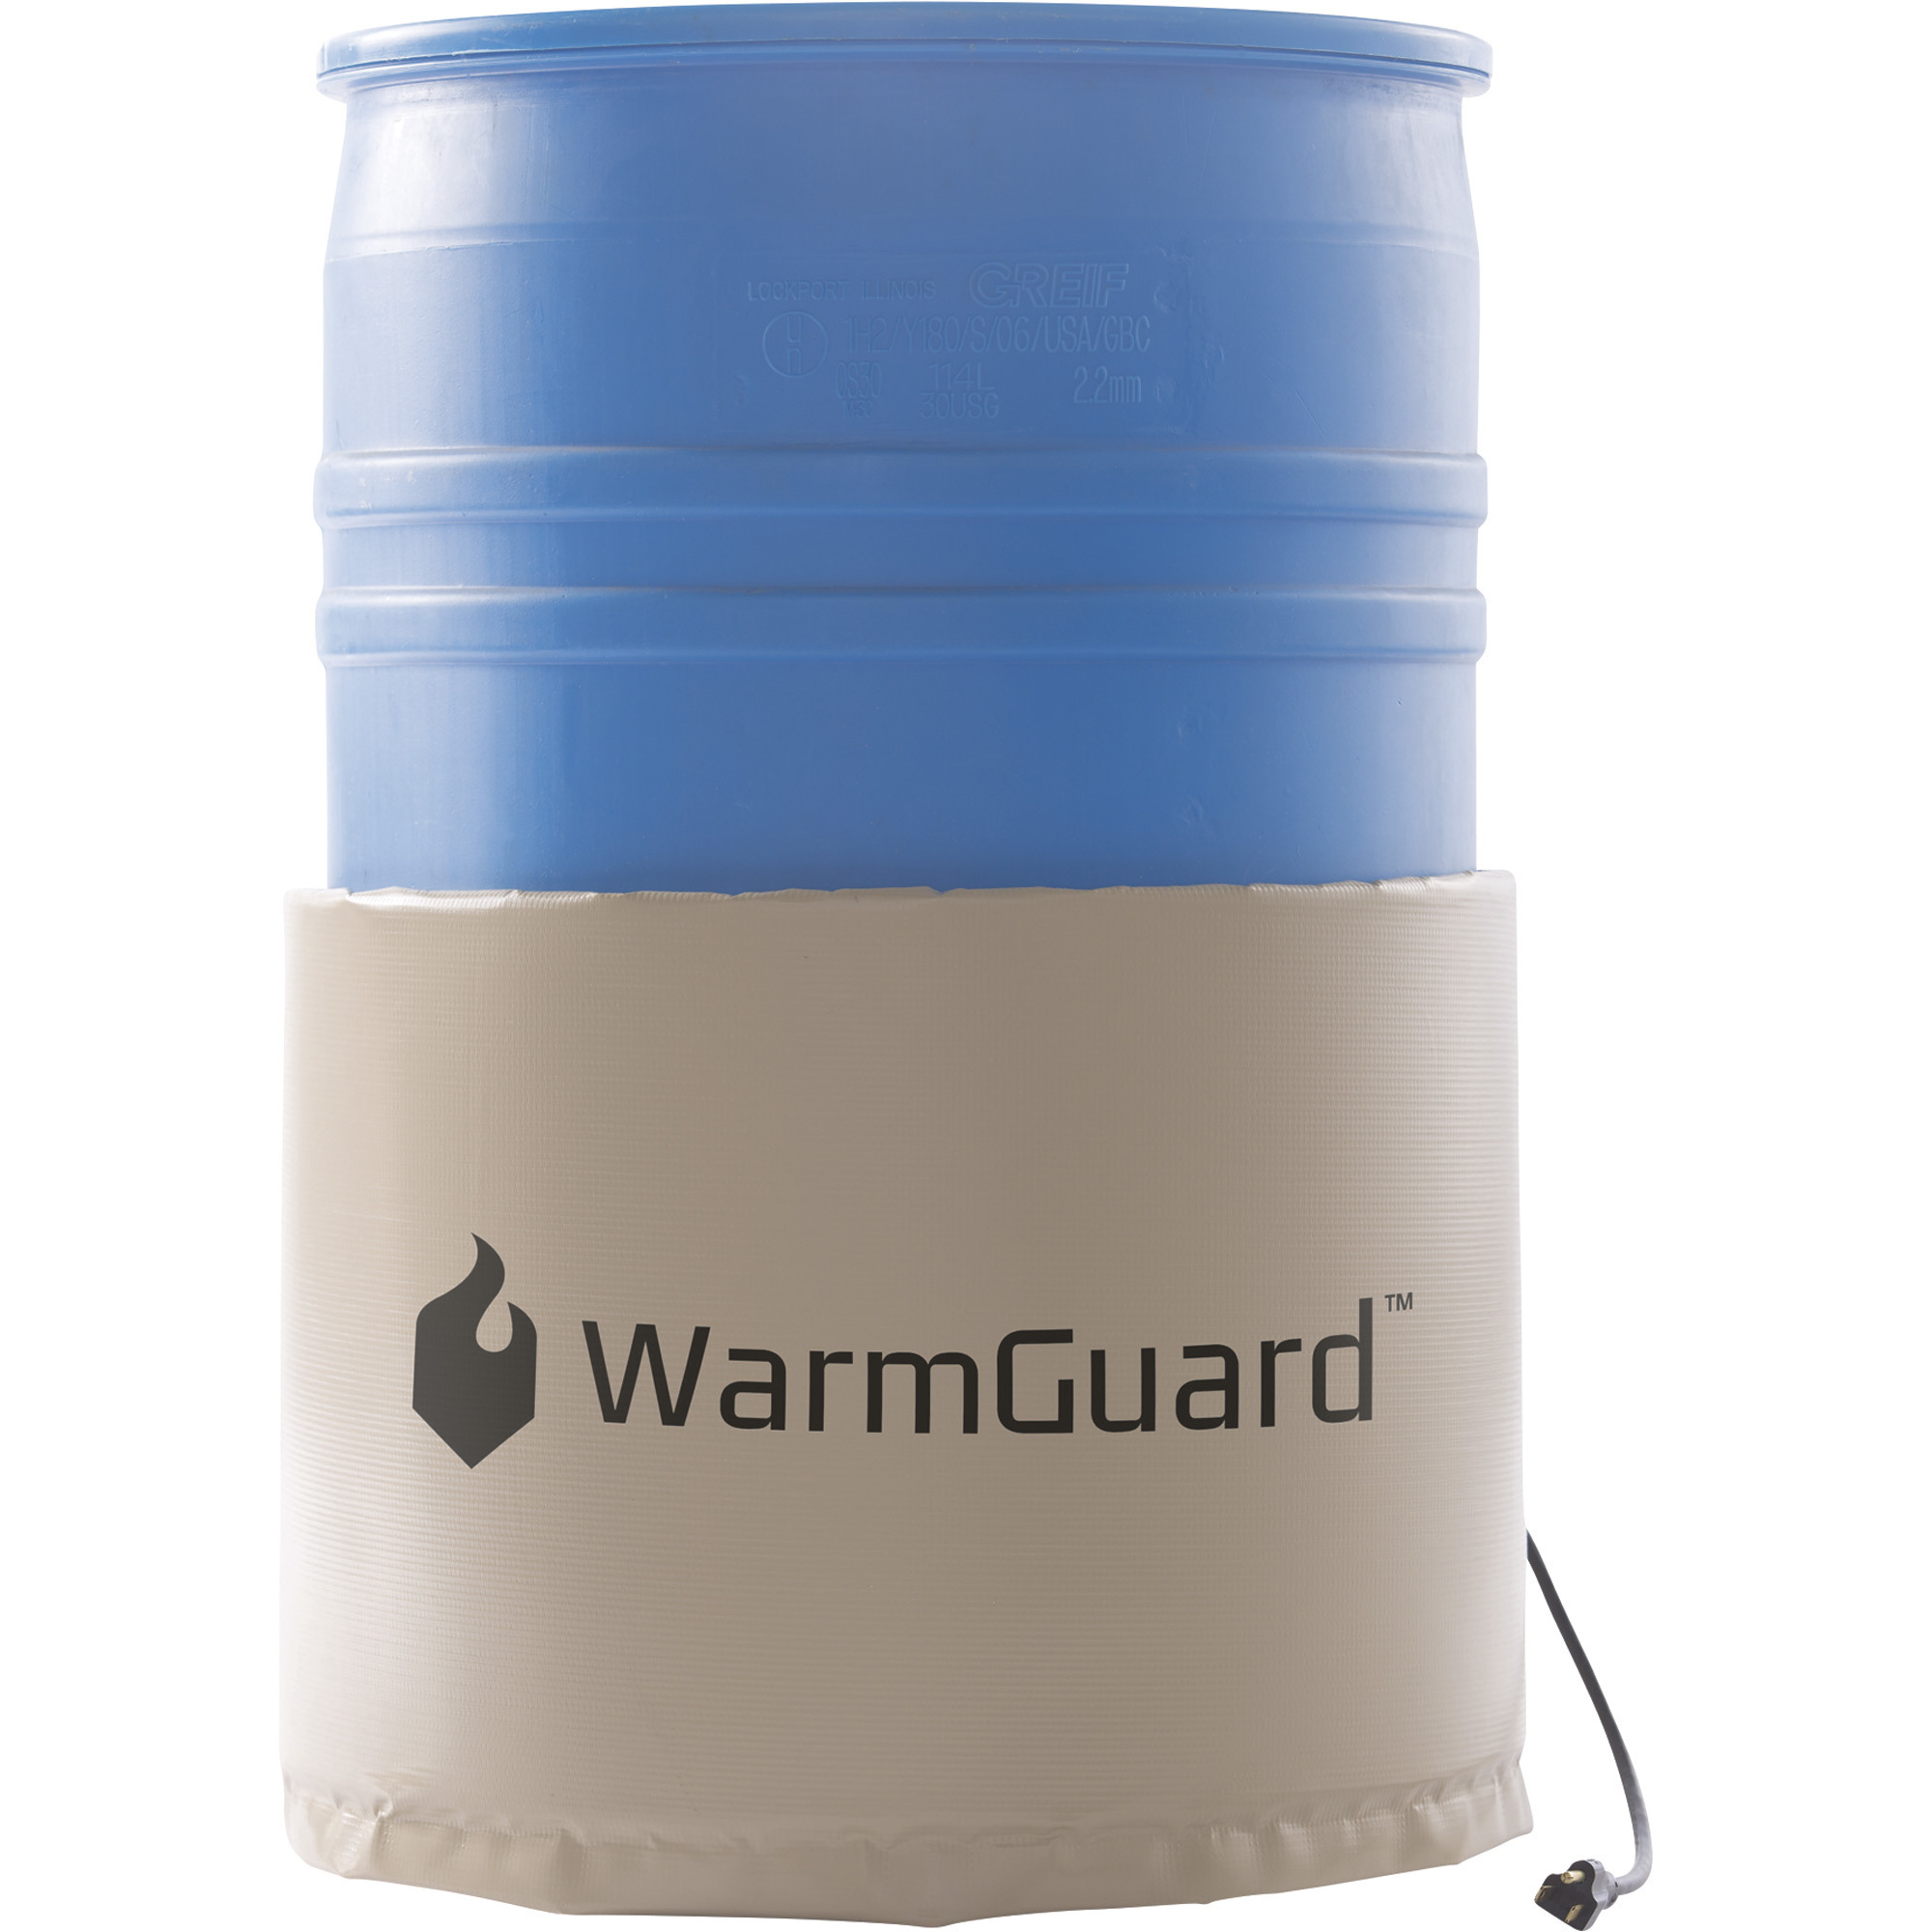 WarmGuard Drum Band Heater, 30-Gallon Capacity, Model WG30